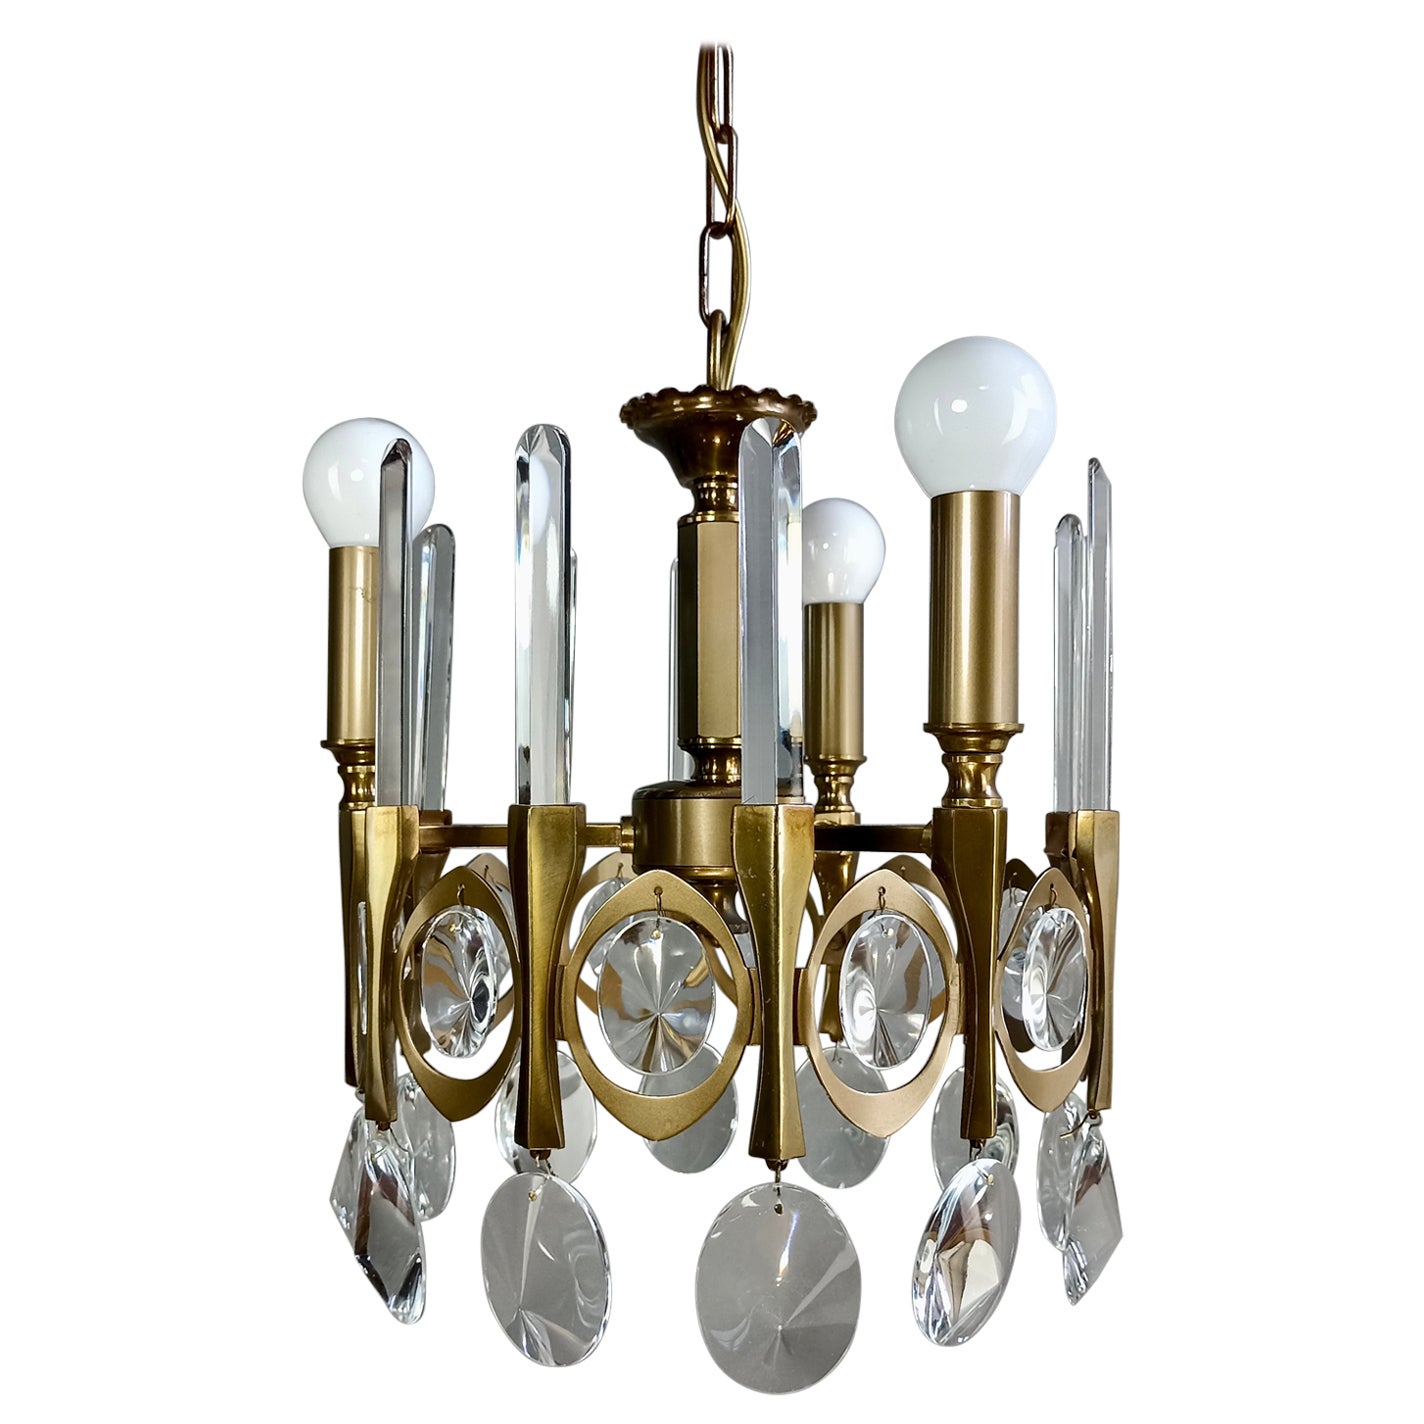 Gaetano Sciolari, three-light chandelier "Ovali", 1960s. Brass and crystals.